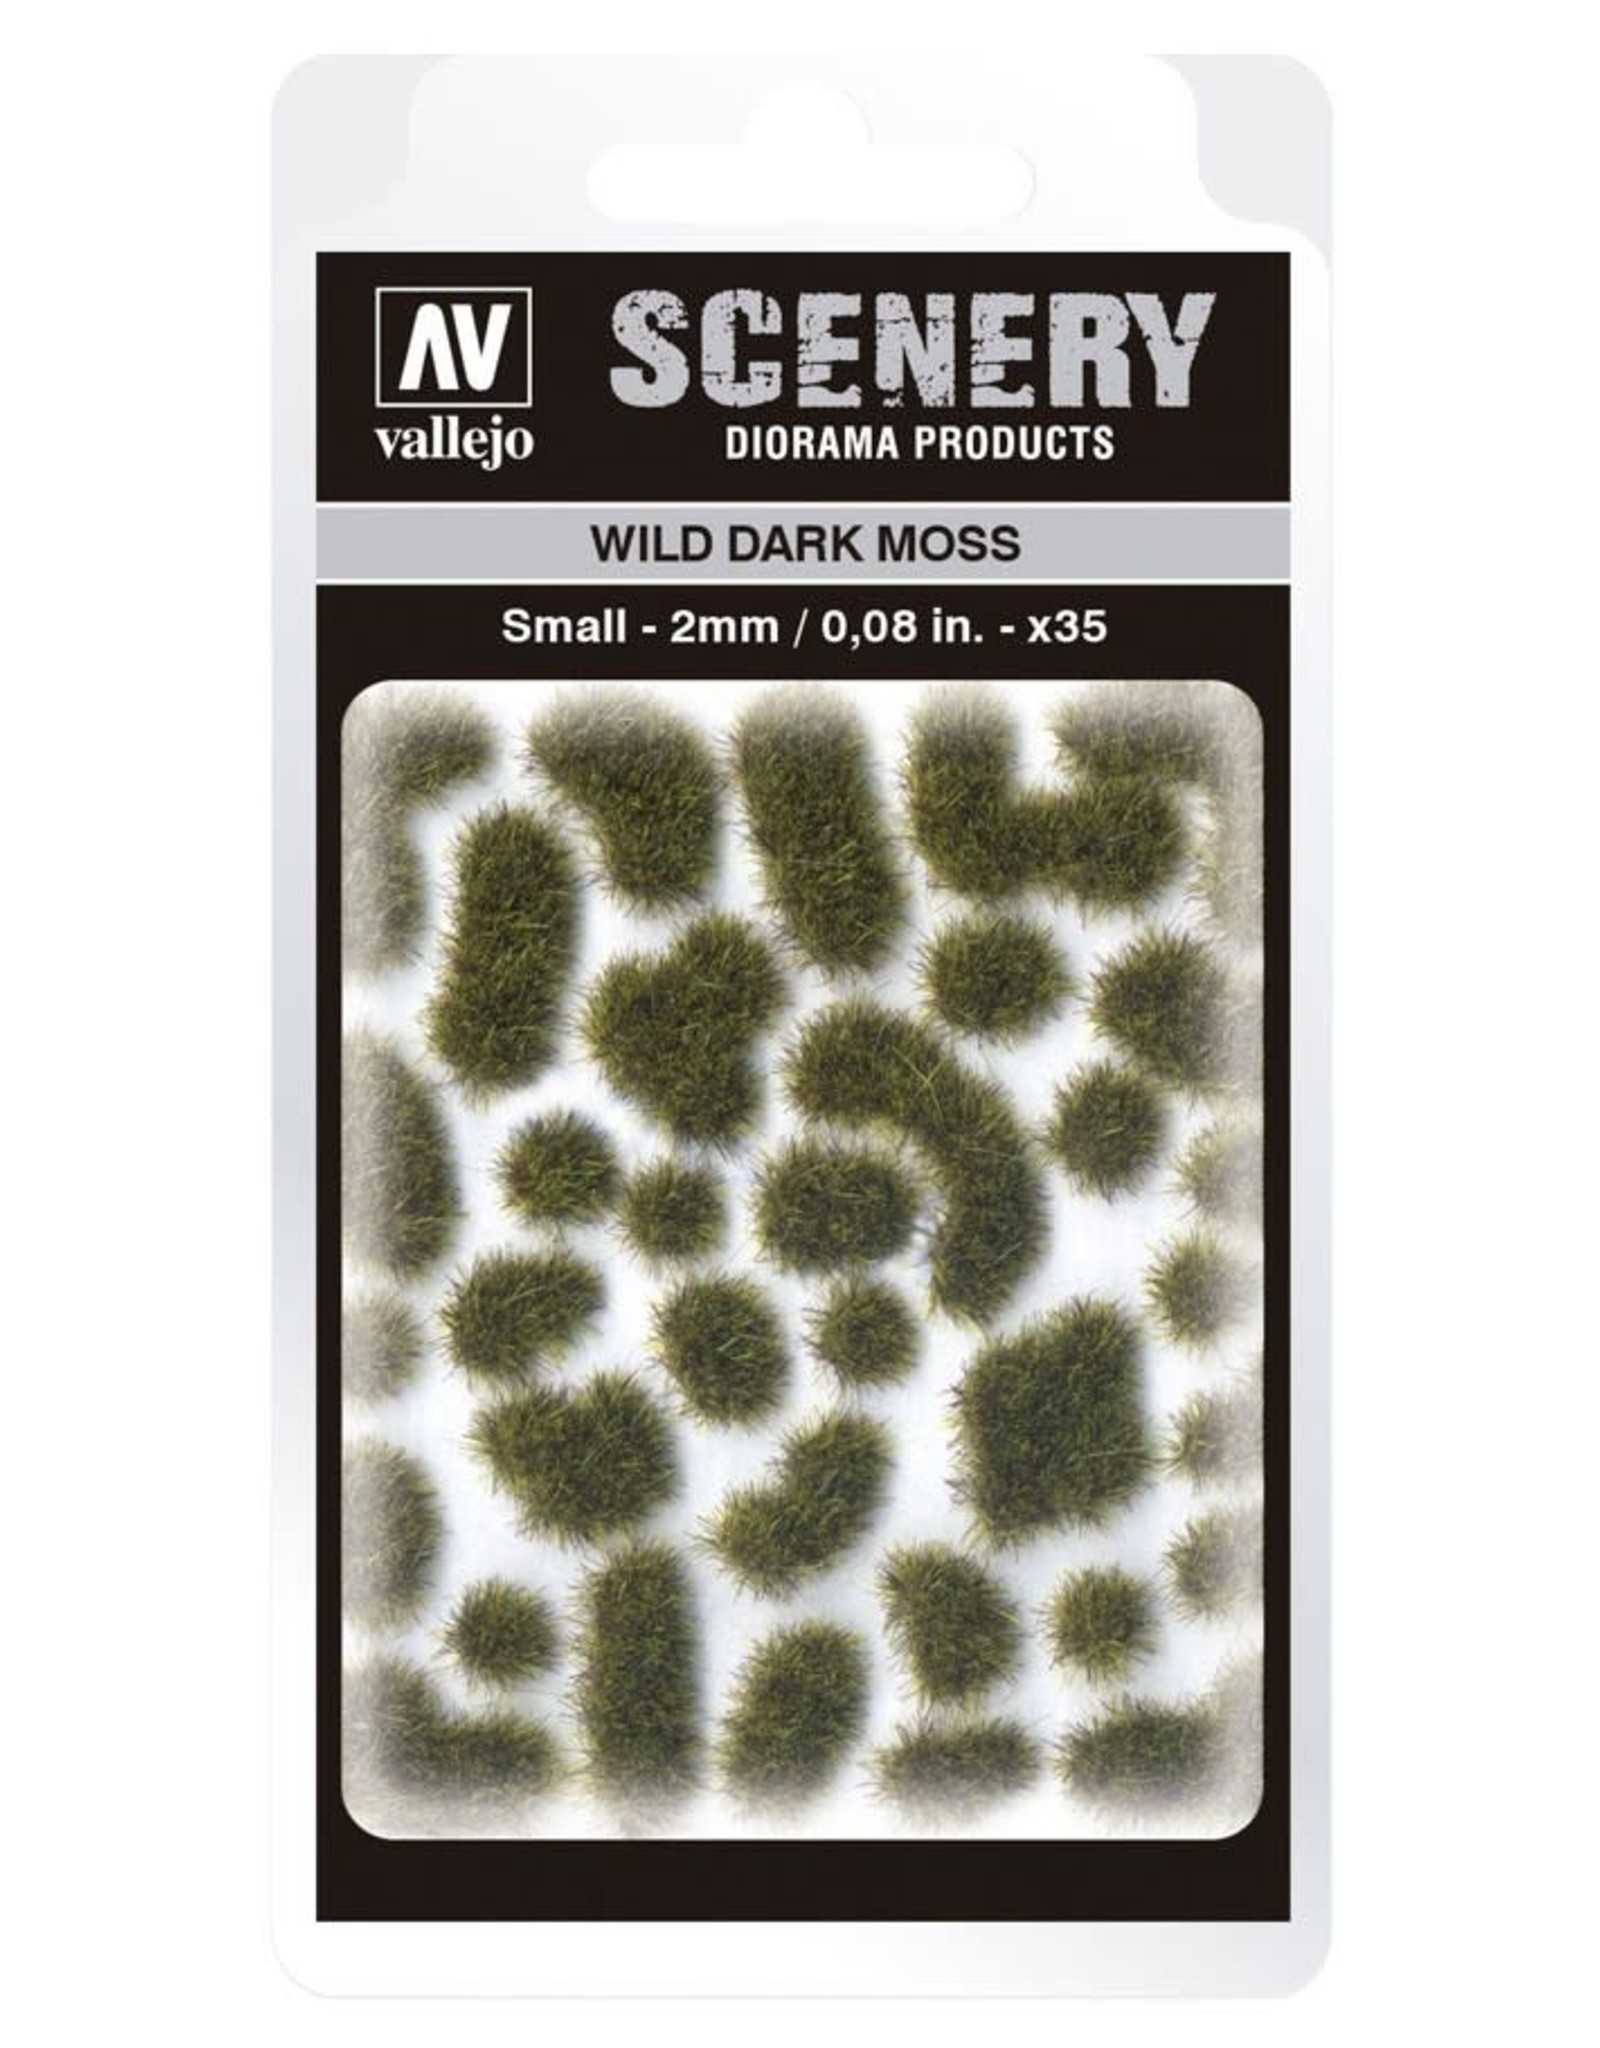 Acrylicos Vallejo AV Scenery: Wild Dark Moss - Small